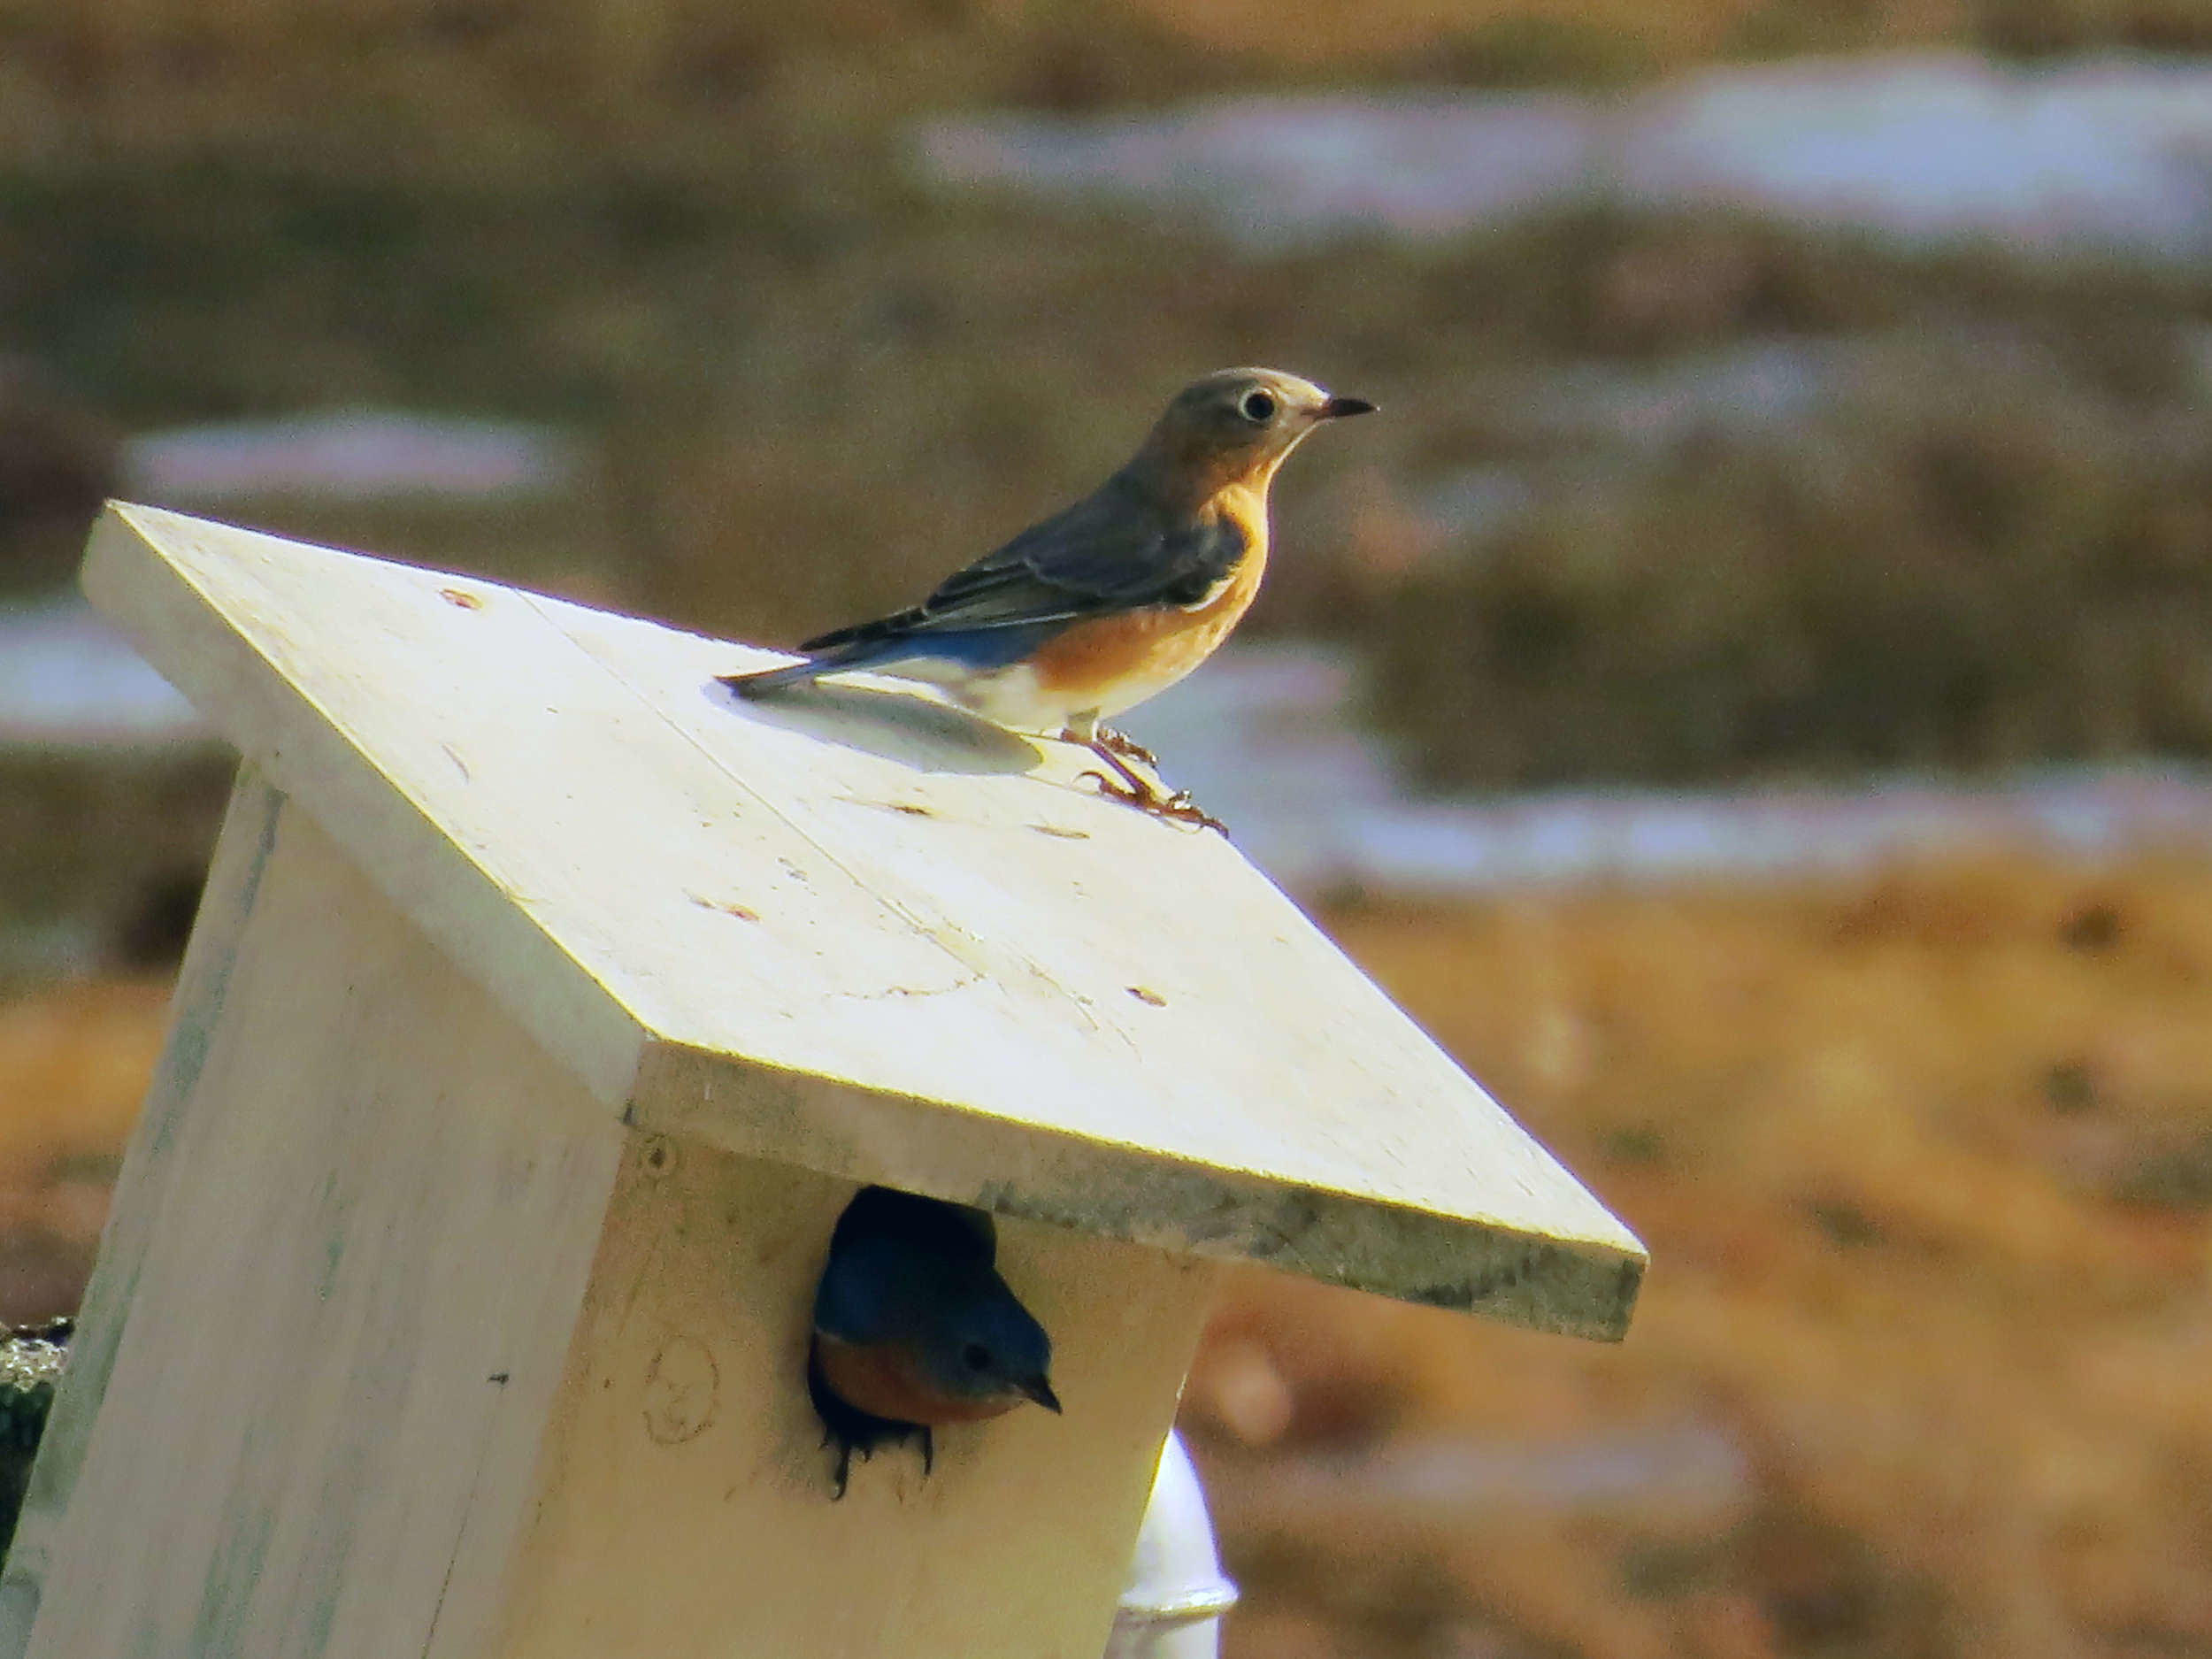 A pair of bluebirds on a nesting box. (photo © Meade Cadot)